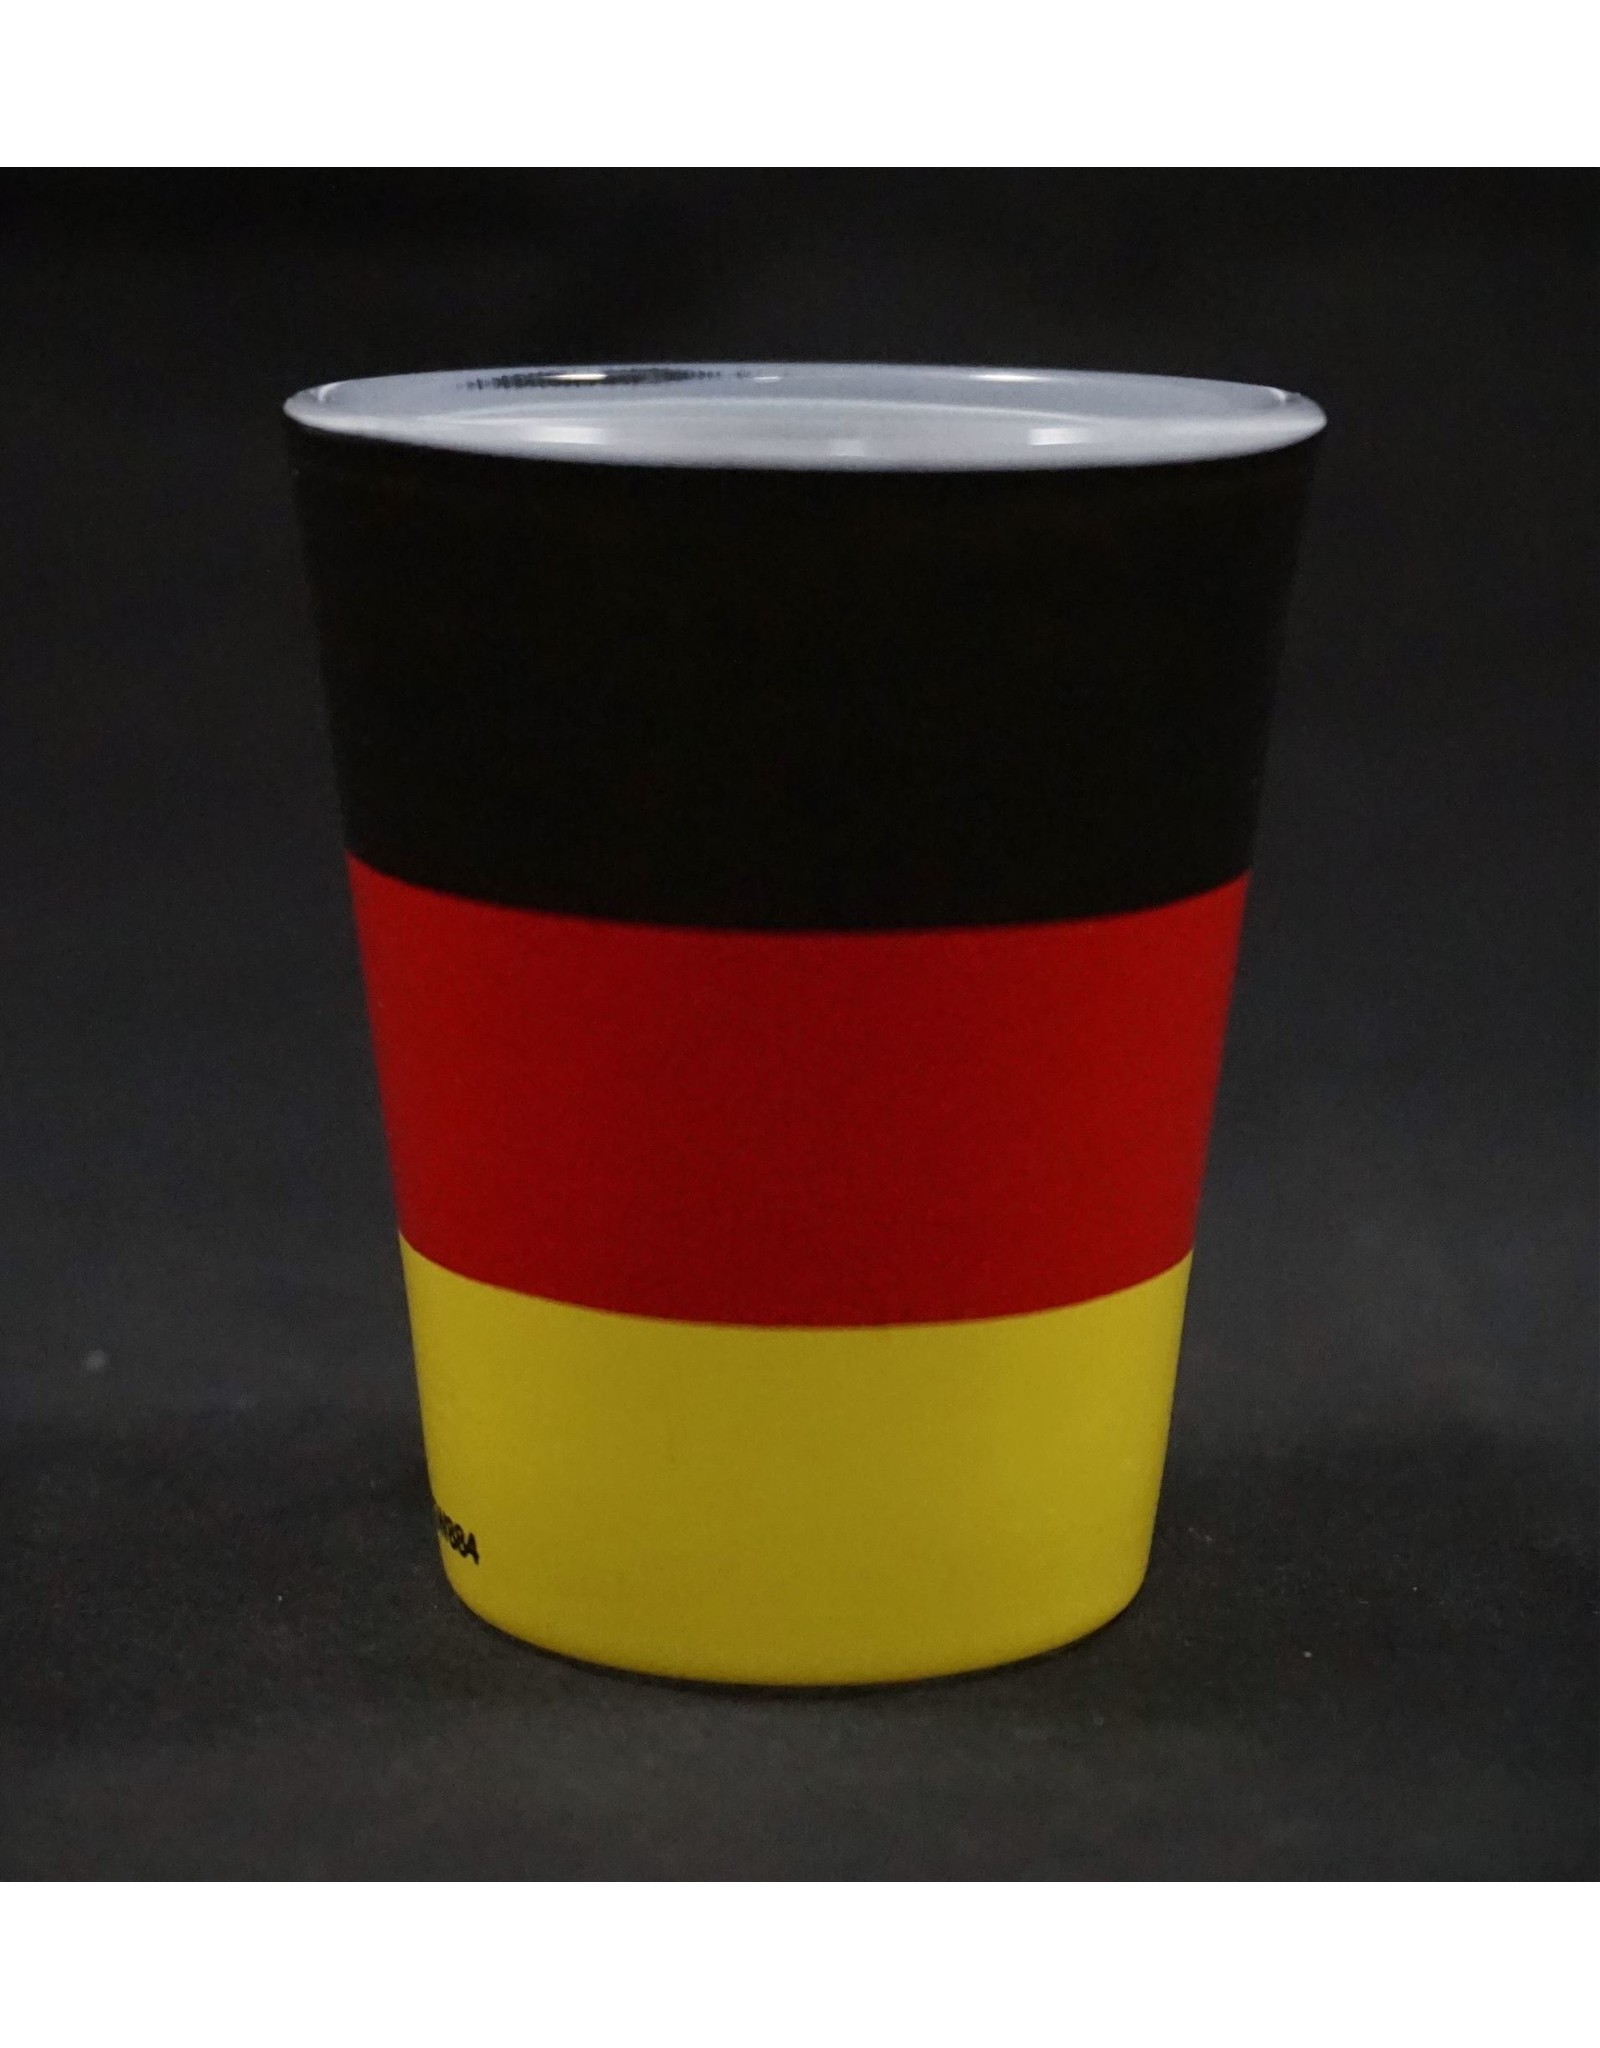 Germany Flag Shot Glass